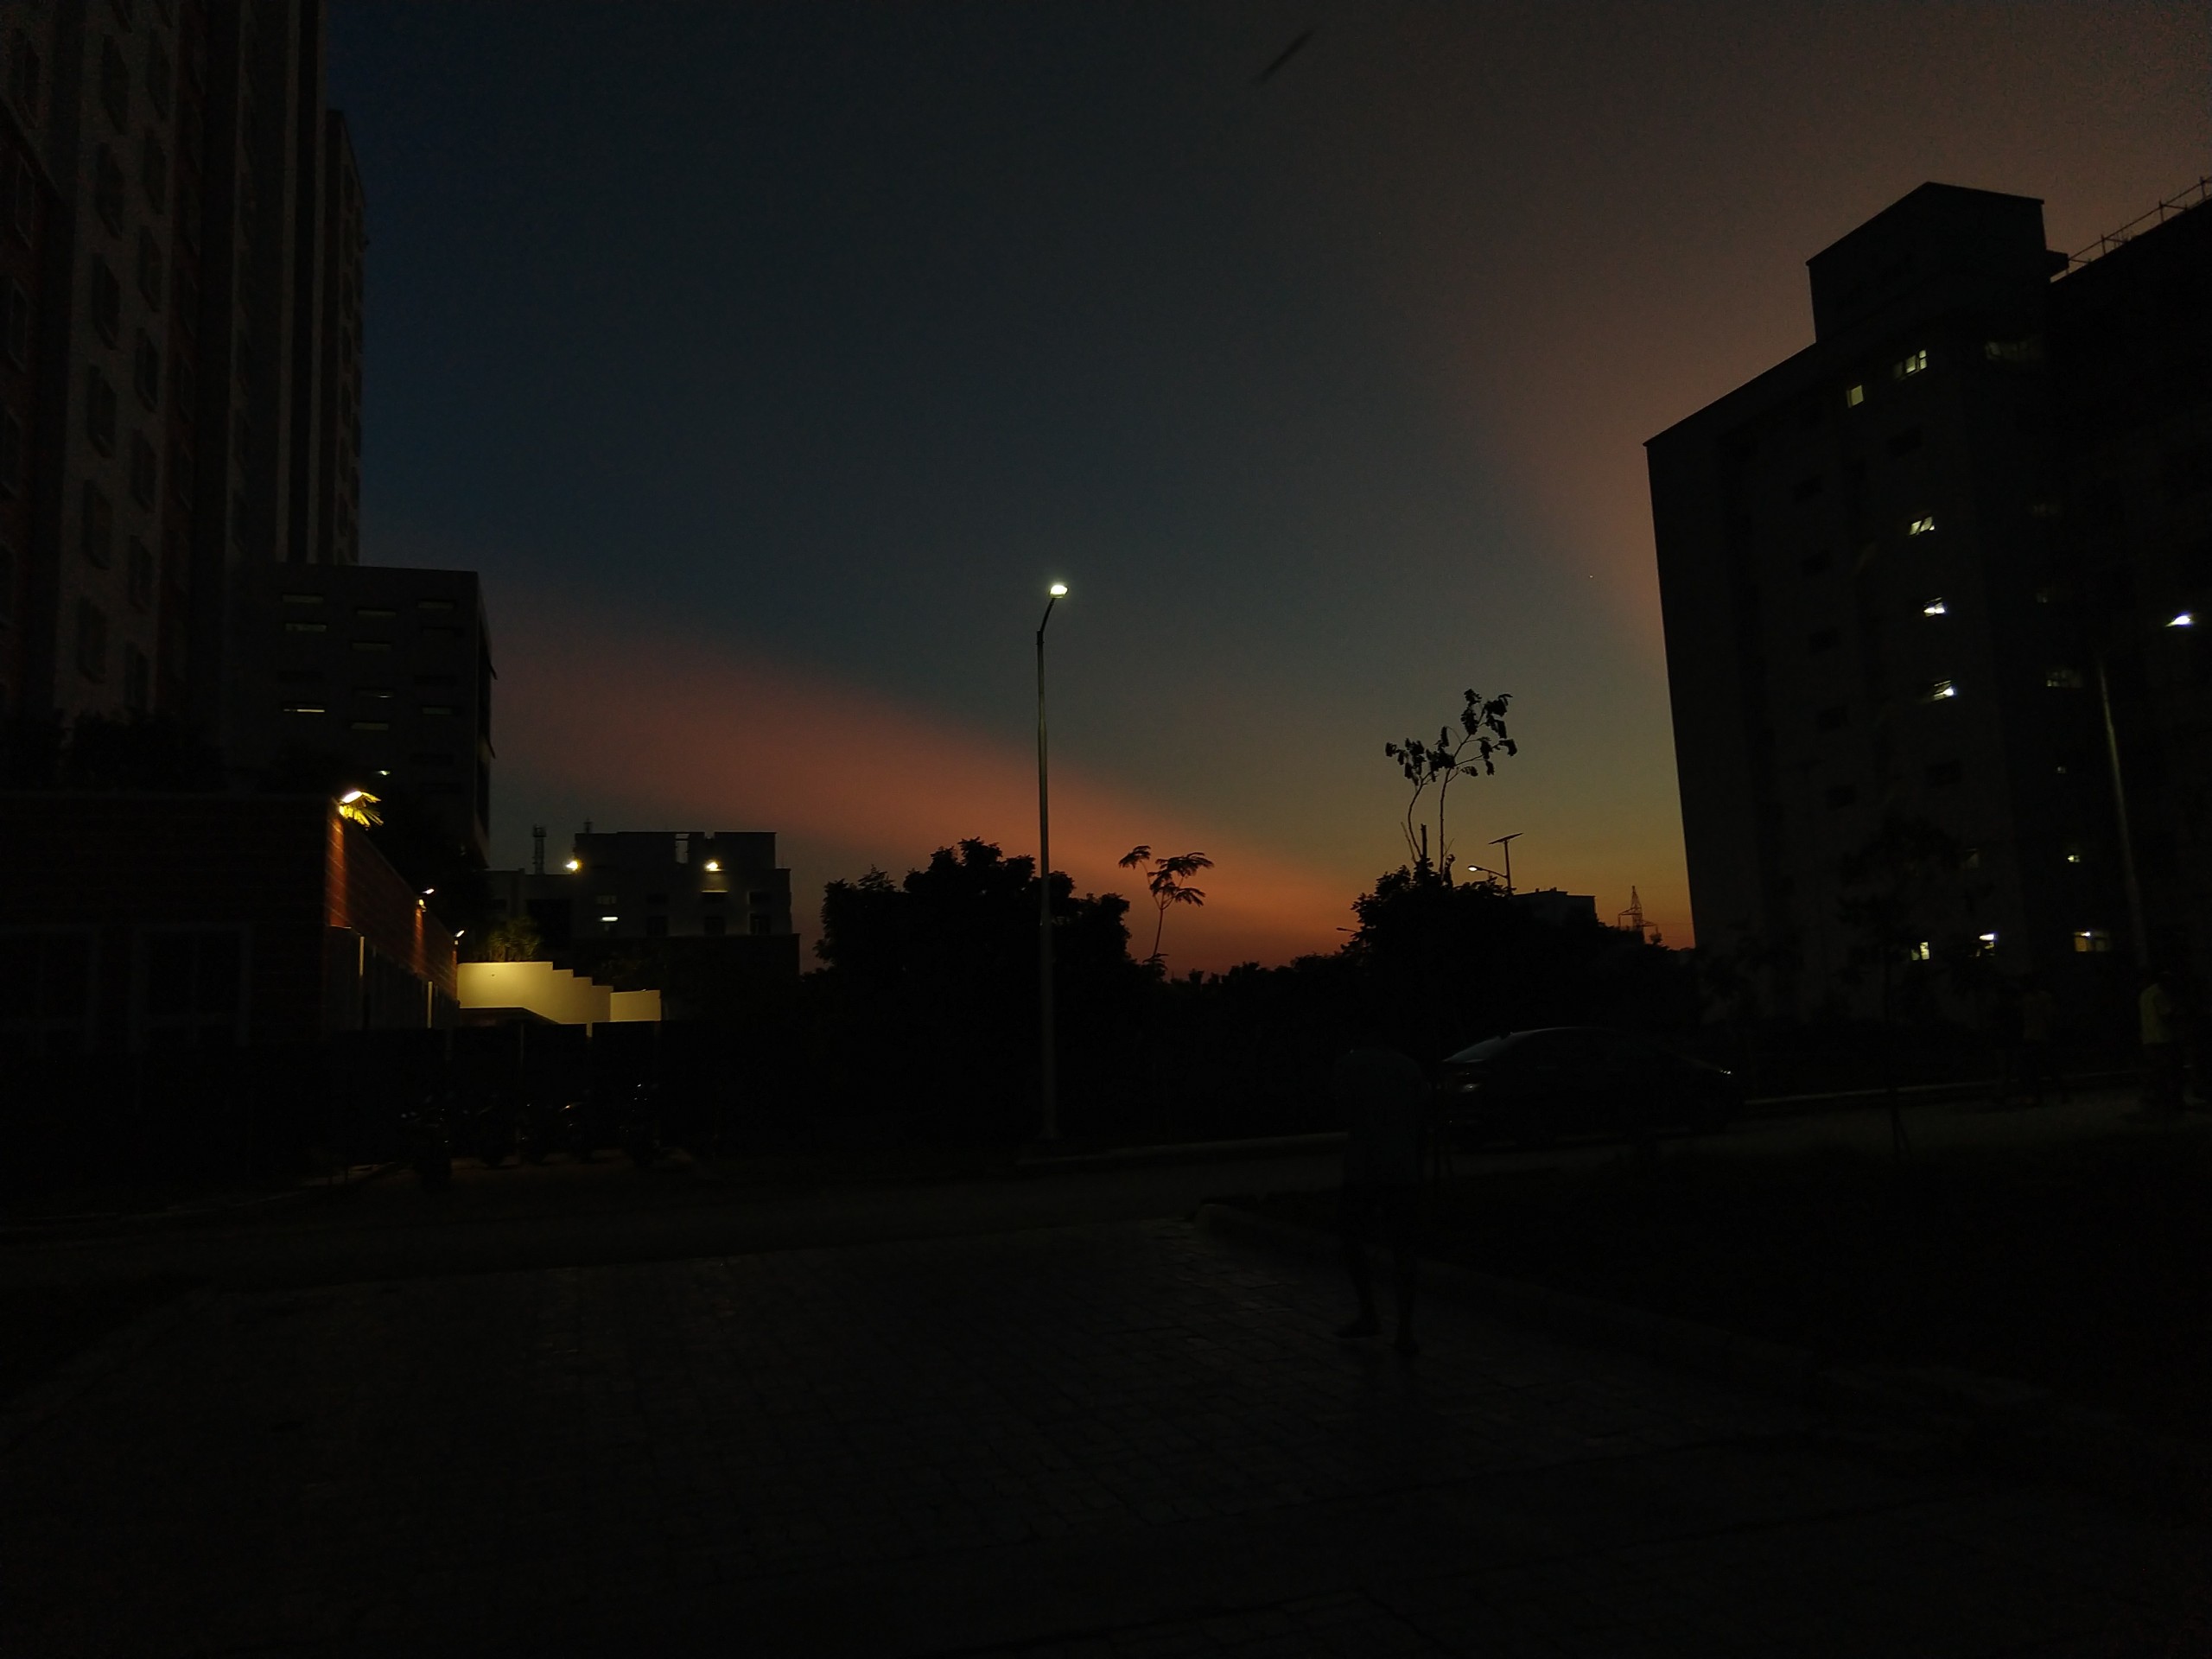 Twilight in the city